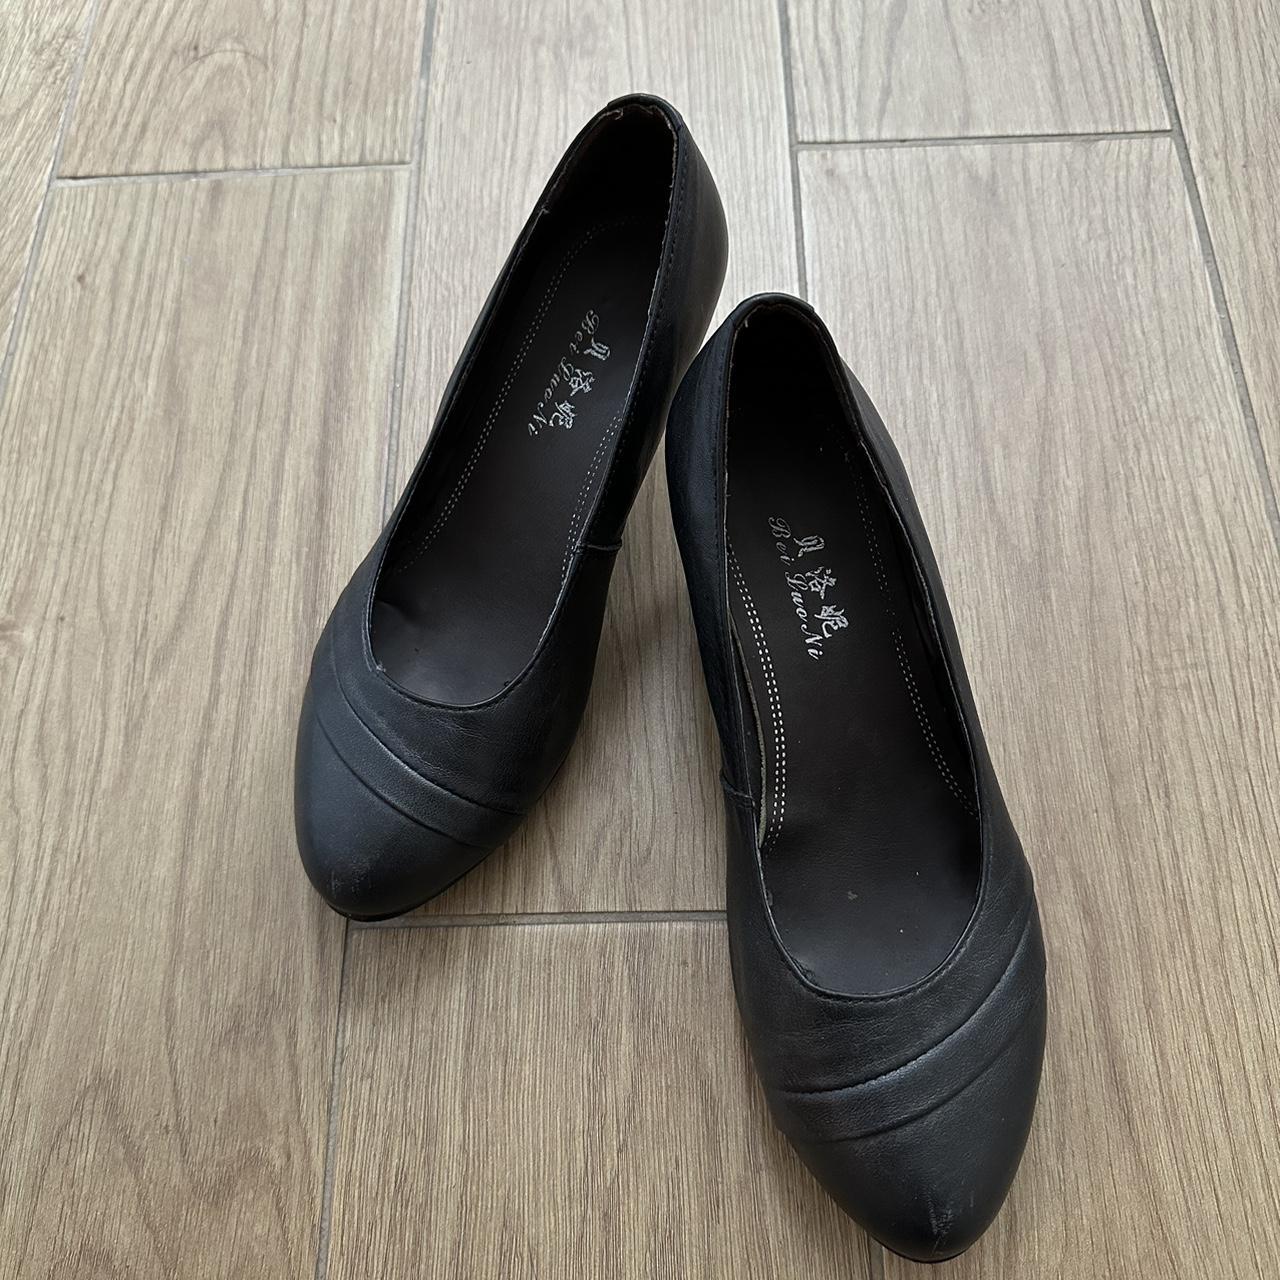 Black court shoes low kitten heels - Depop